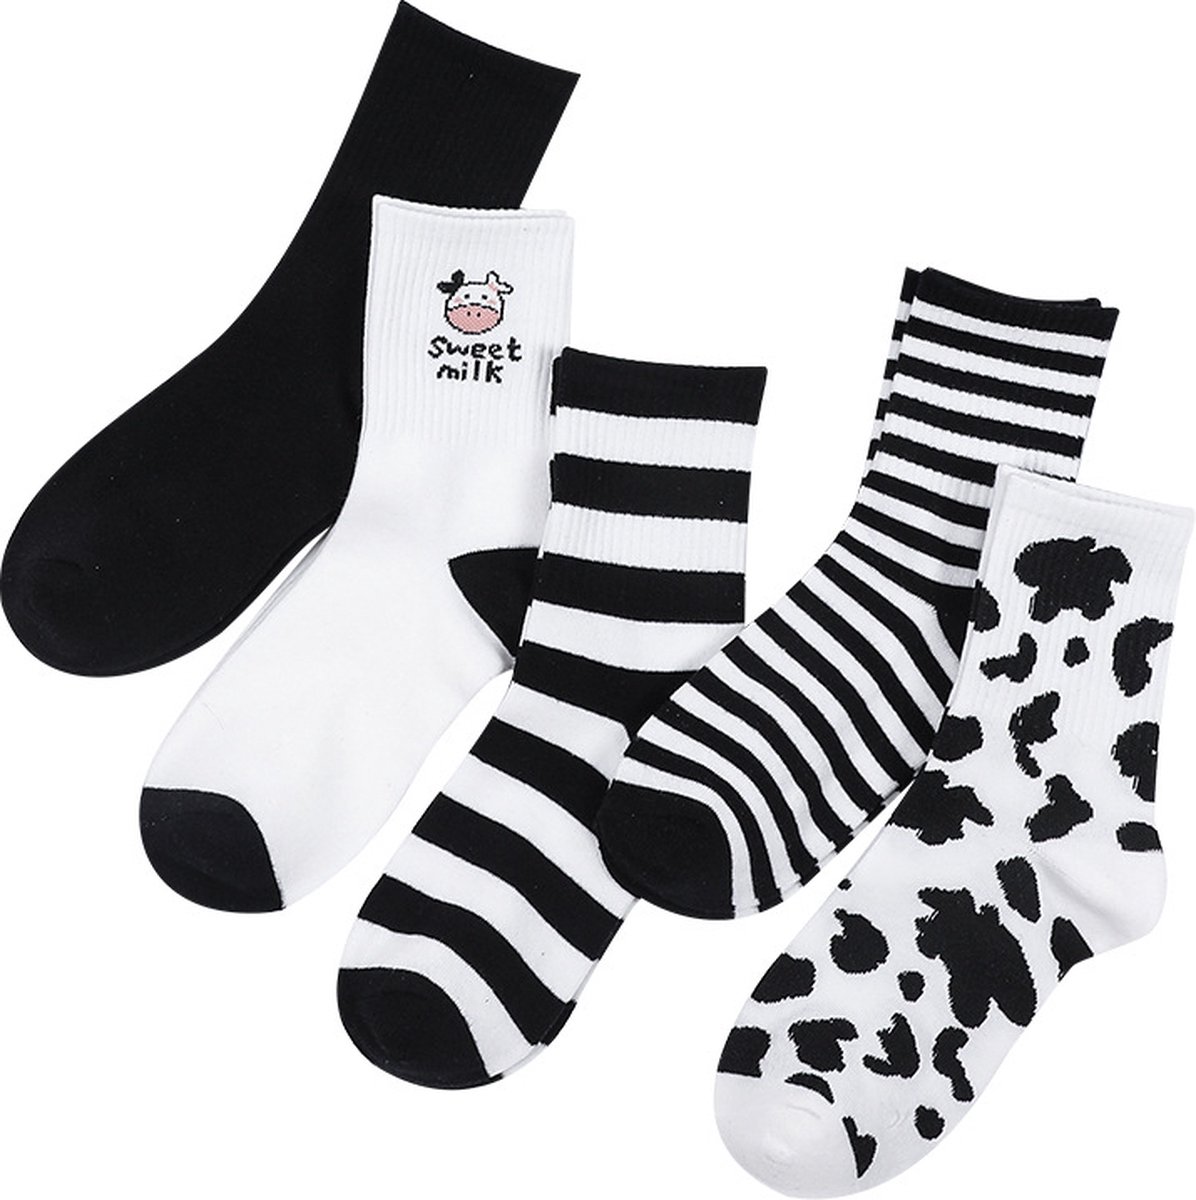 Jolly Socks - 5 Paar Hoge sokken Dames Koeienprint - Grappige sokken - Funny socks - Vrolijke sokken - Leuke sokken - Sokken Koe - Maat 35-42